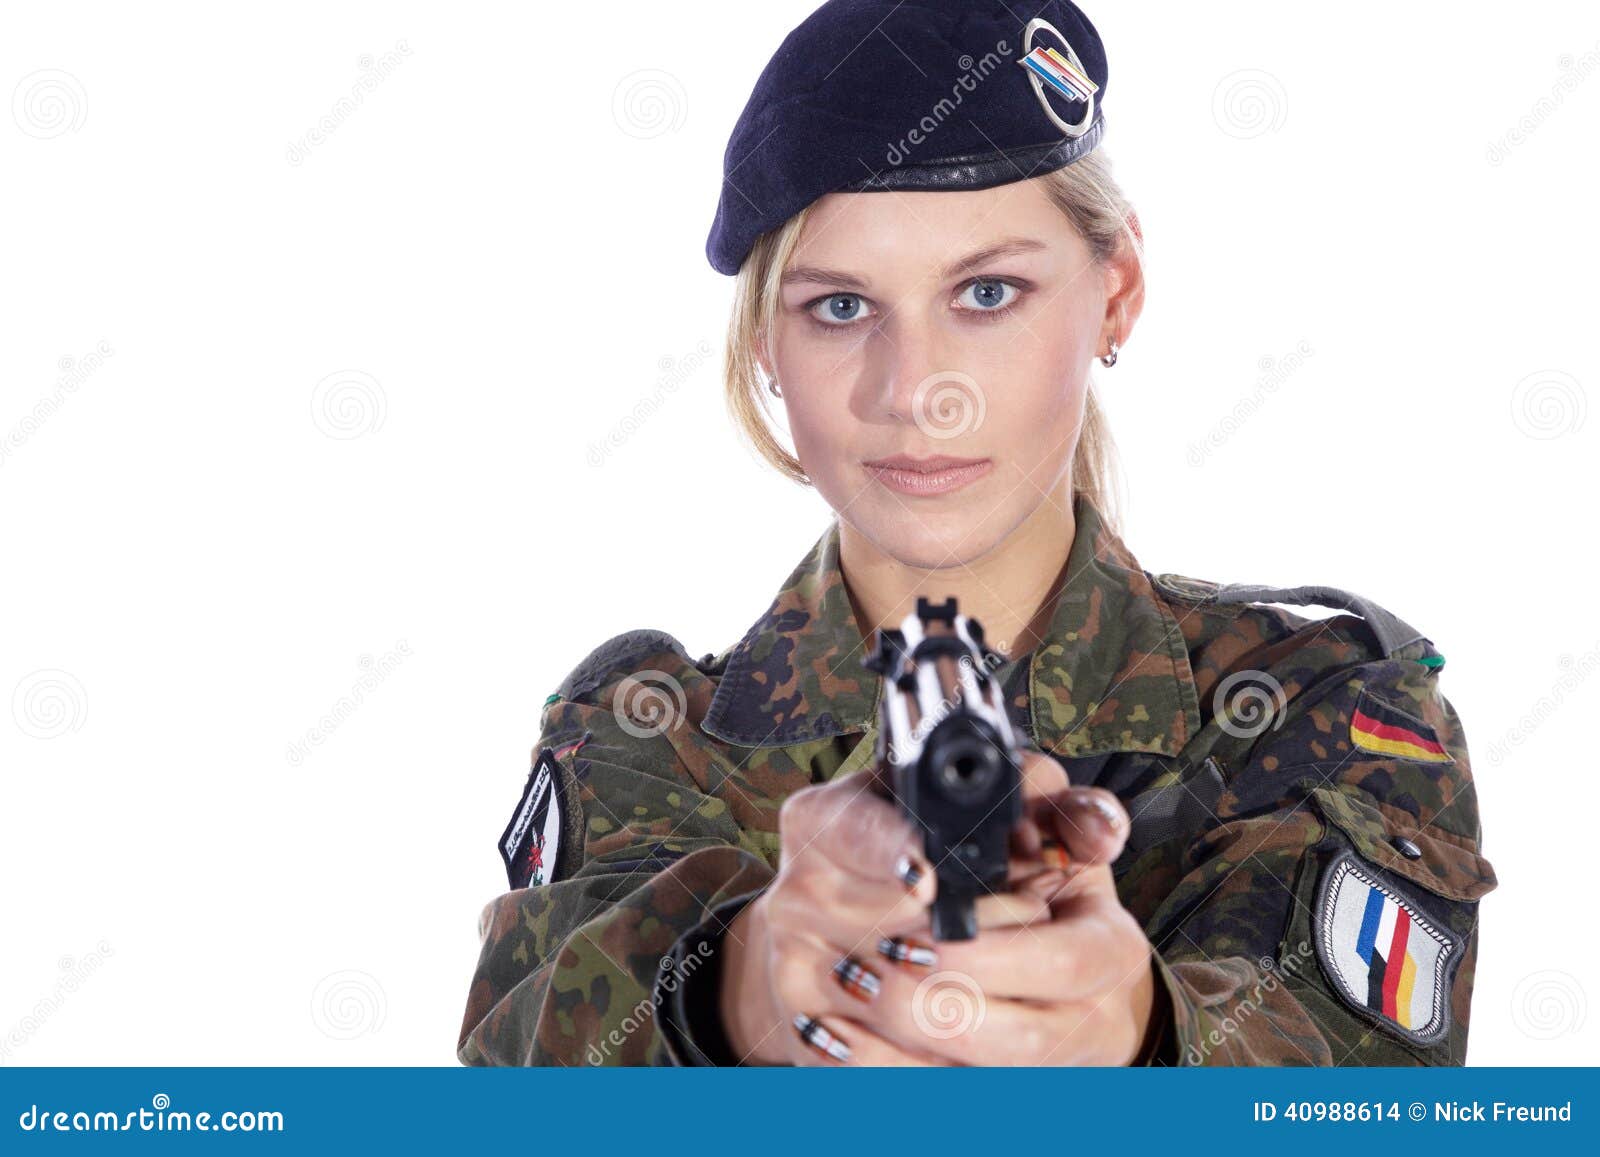 woman-soldier-gun-pretty-40988614.jpg